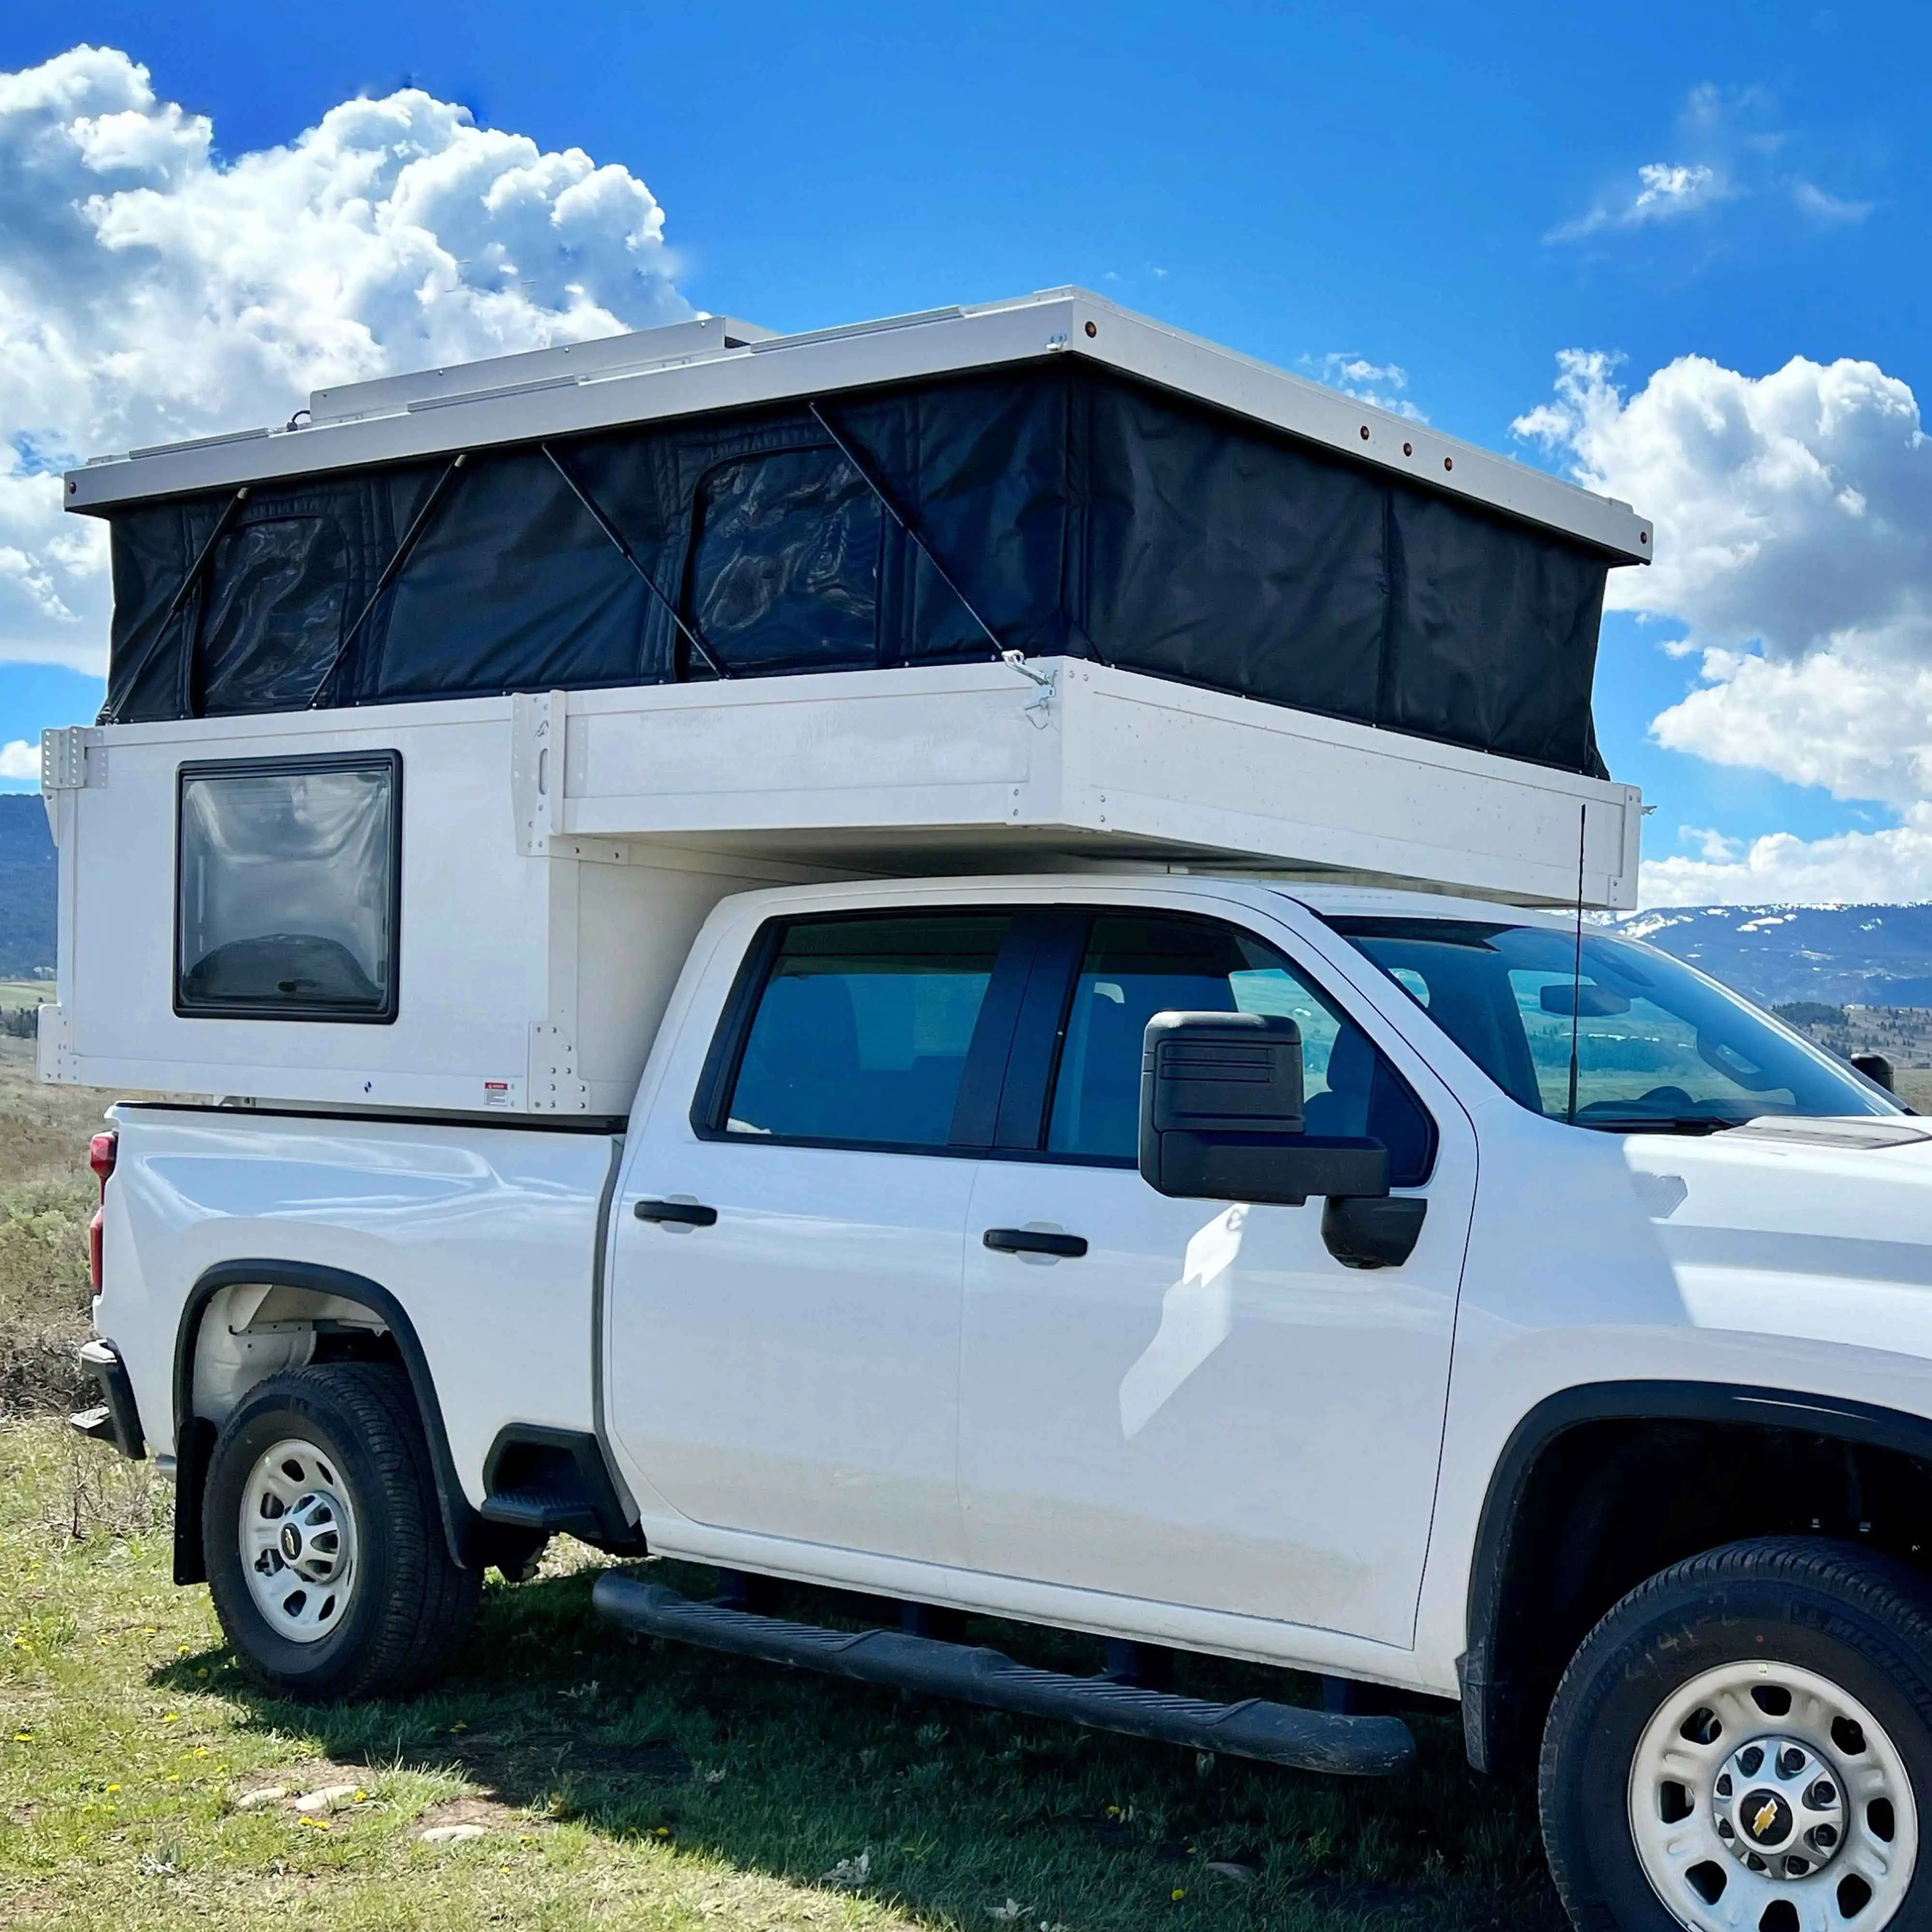 EcoCampor 럭셔리 자유 휴식 완전 가구 트럭 캠핑카 4x4 알루미늄 맞춤형 색상 판매용 여행 주방